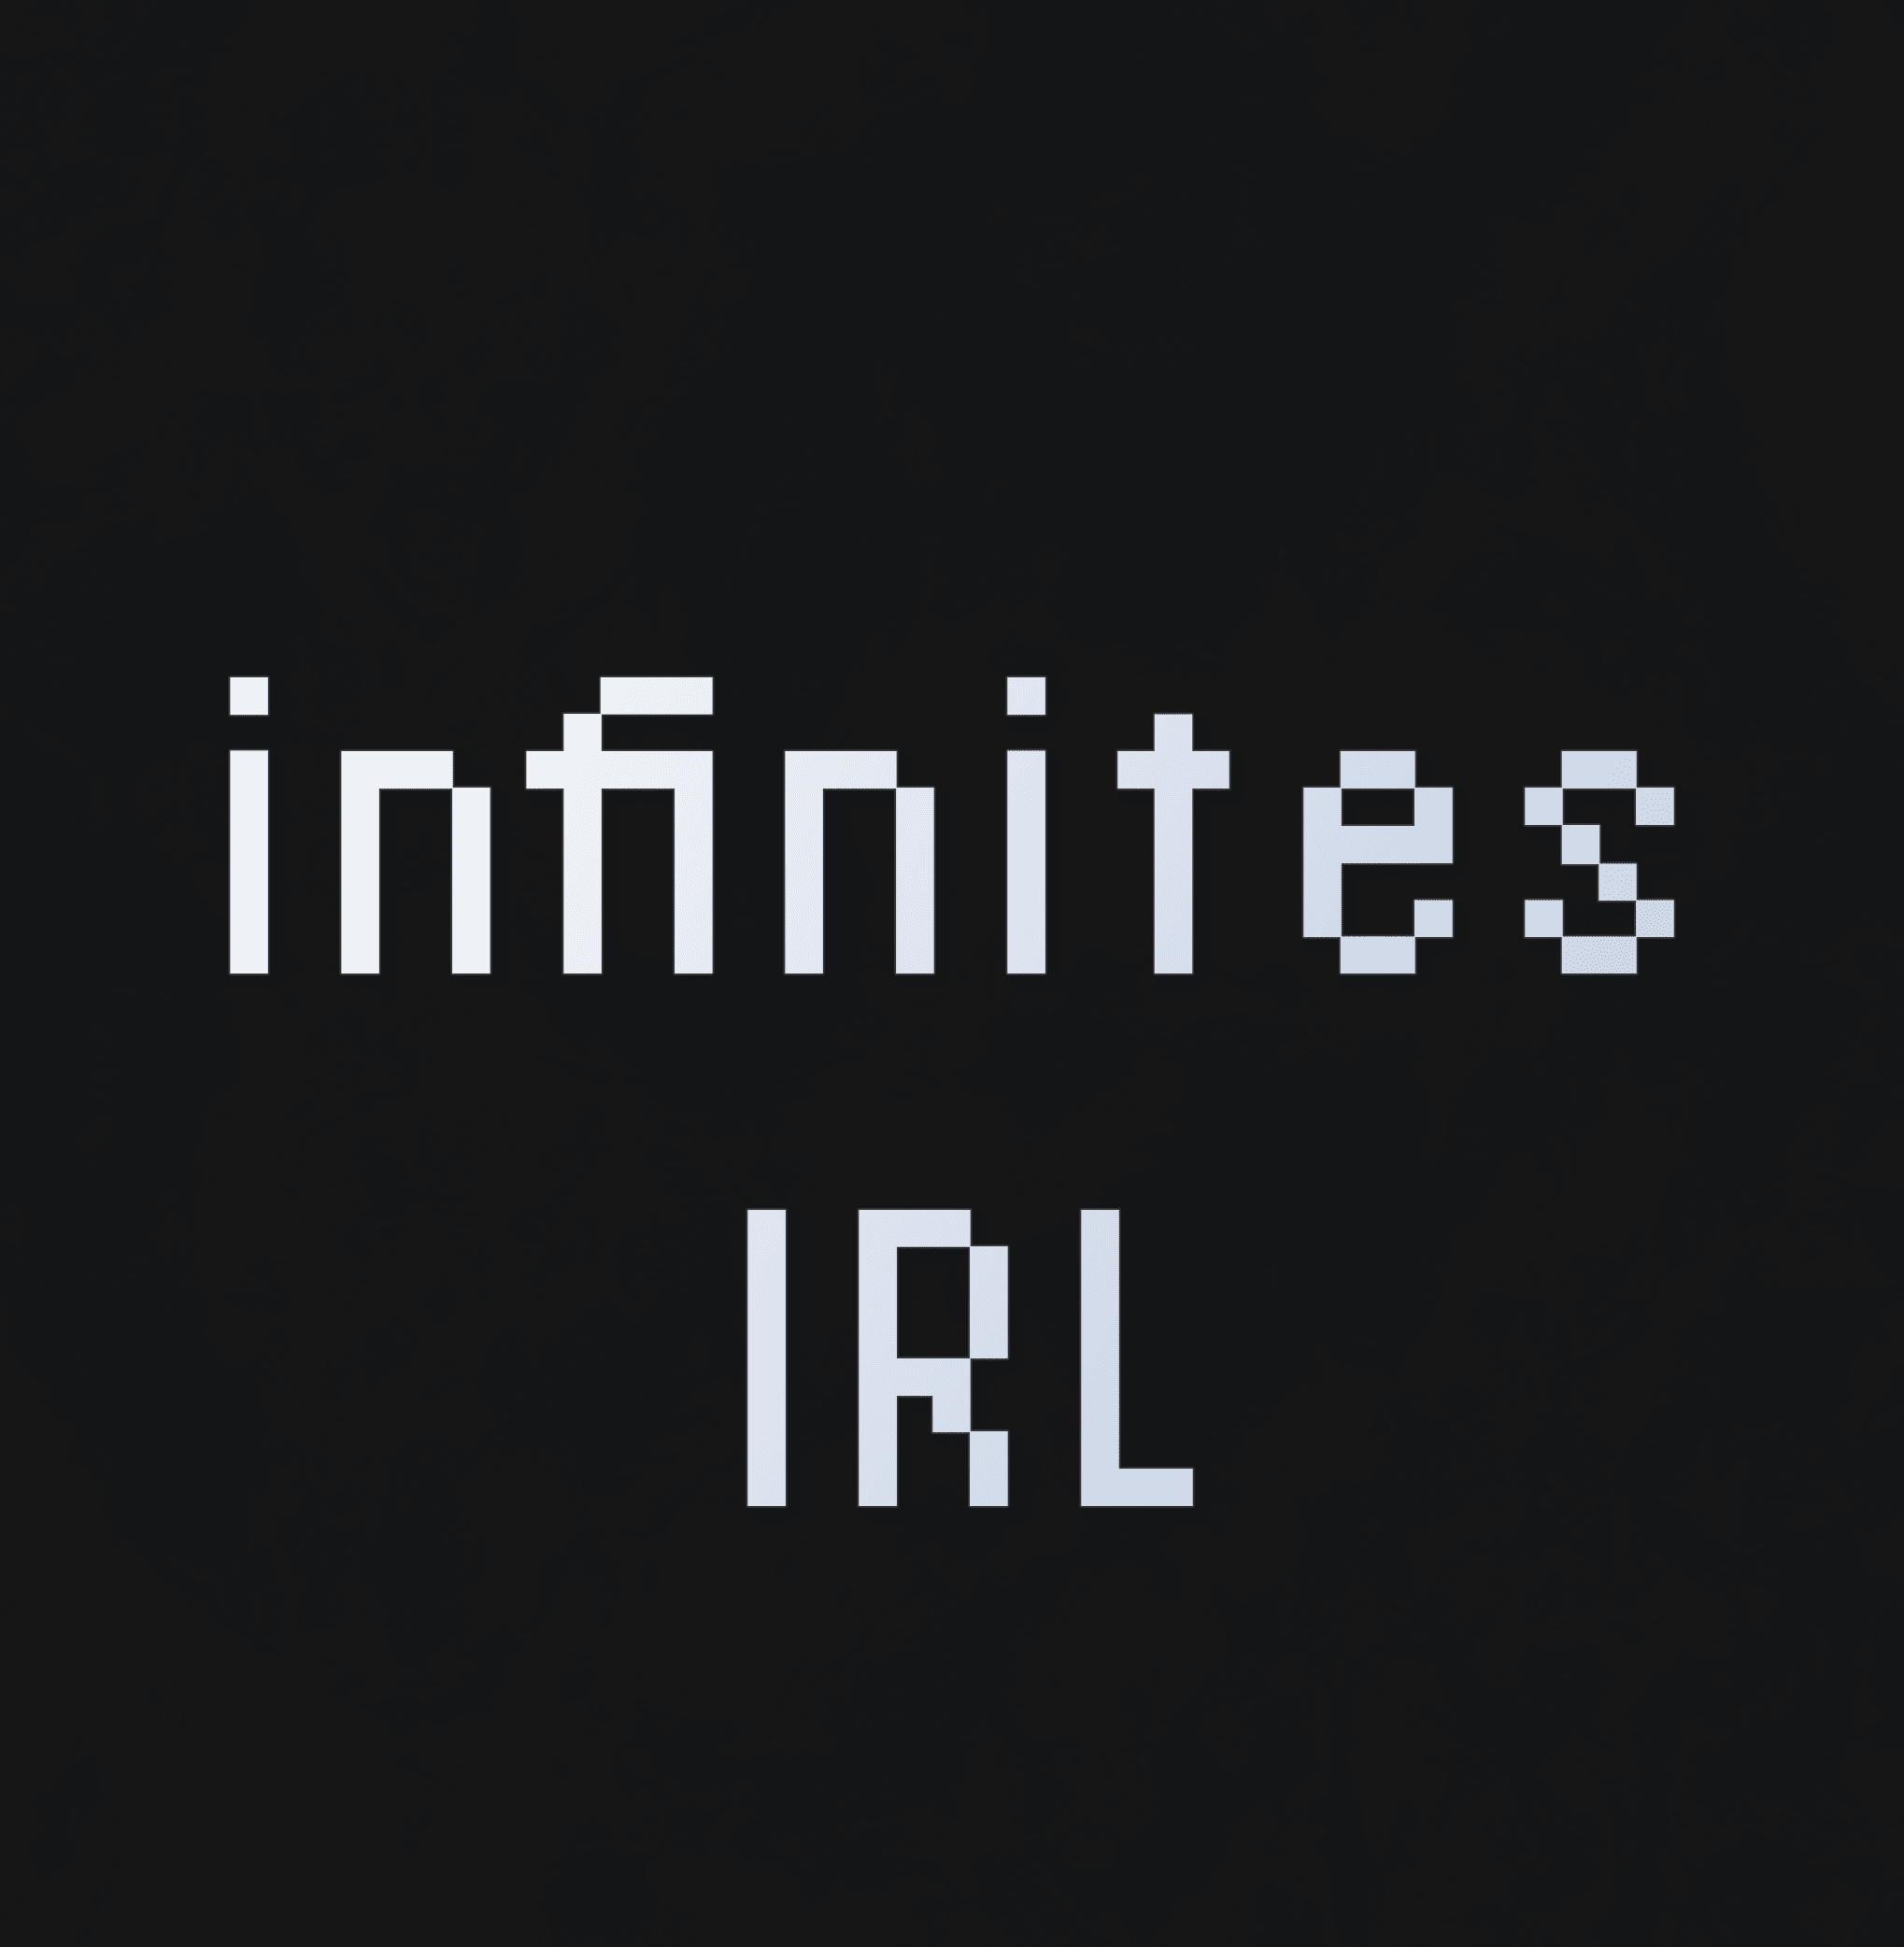 Infinites IRL